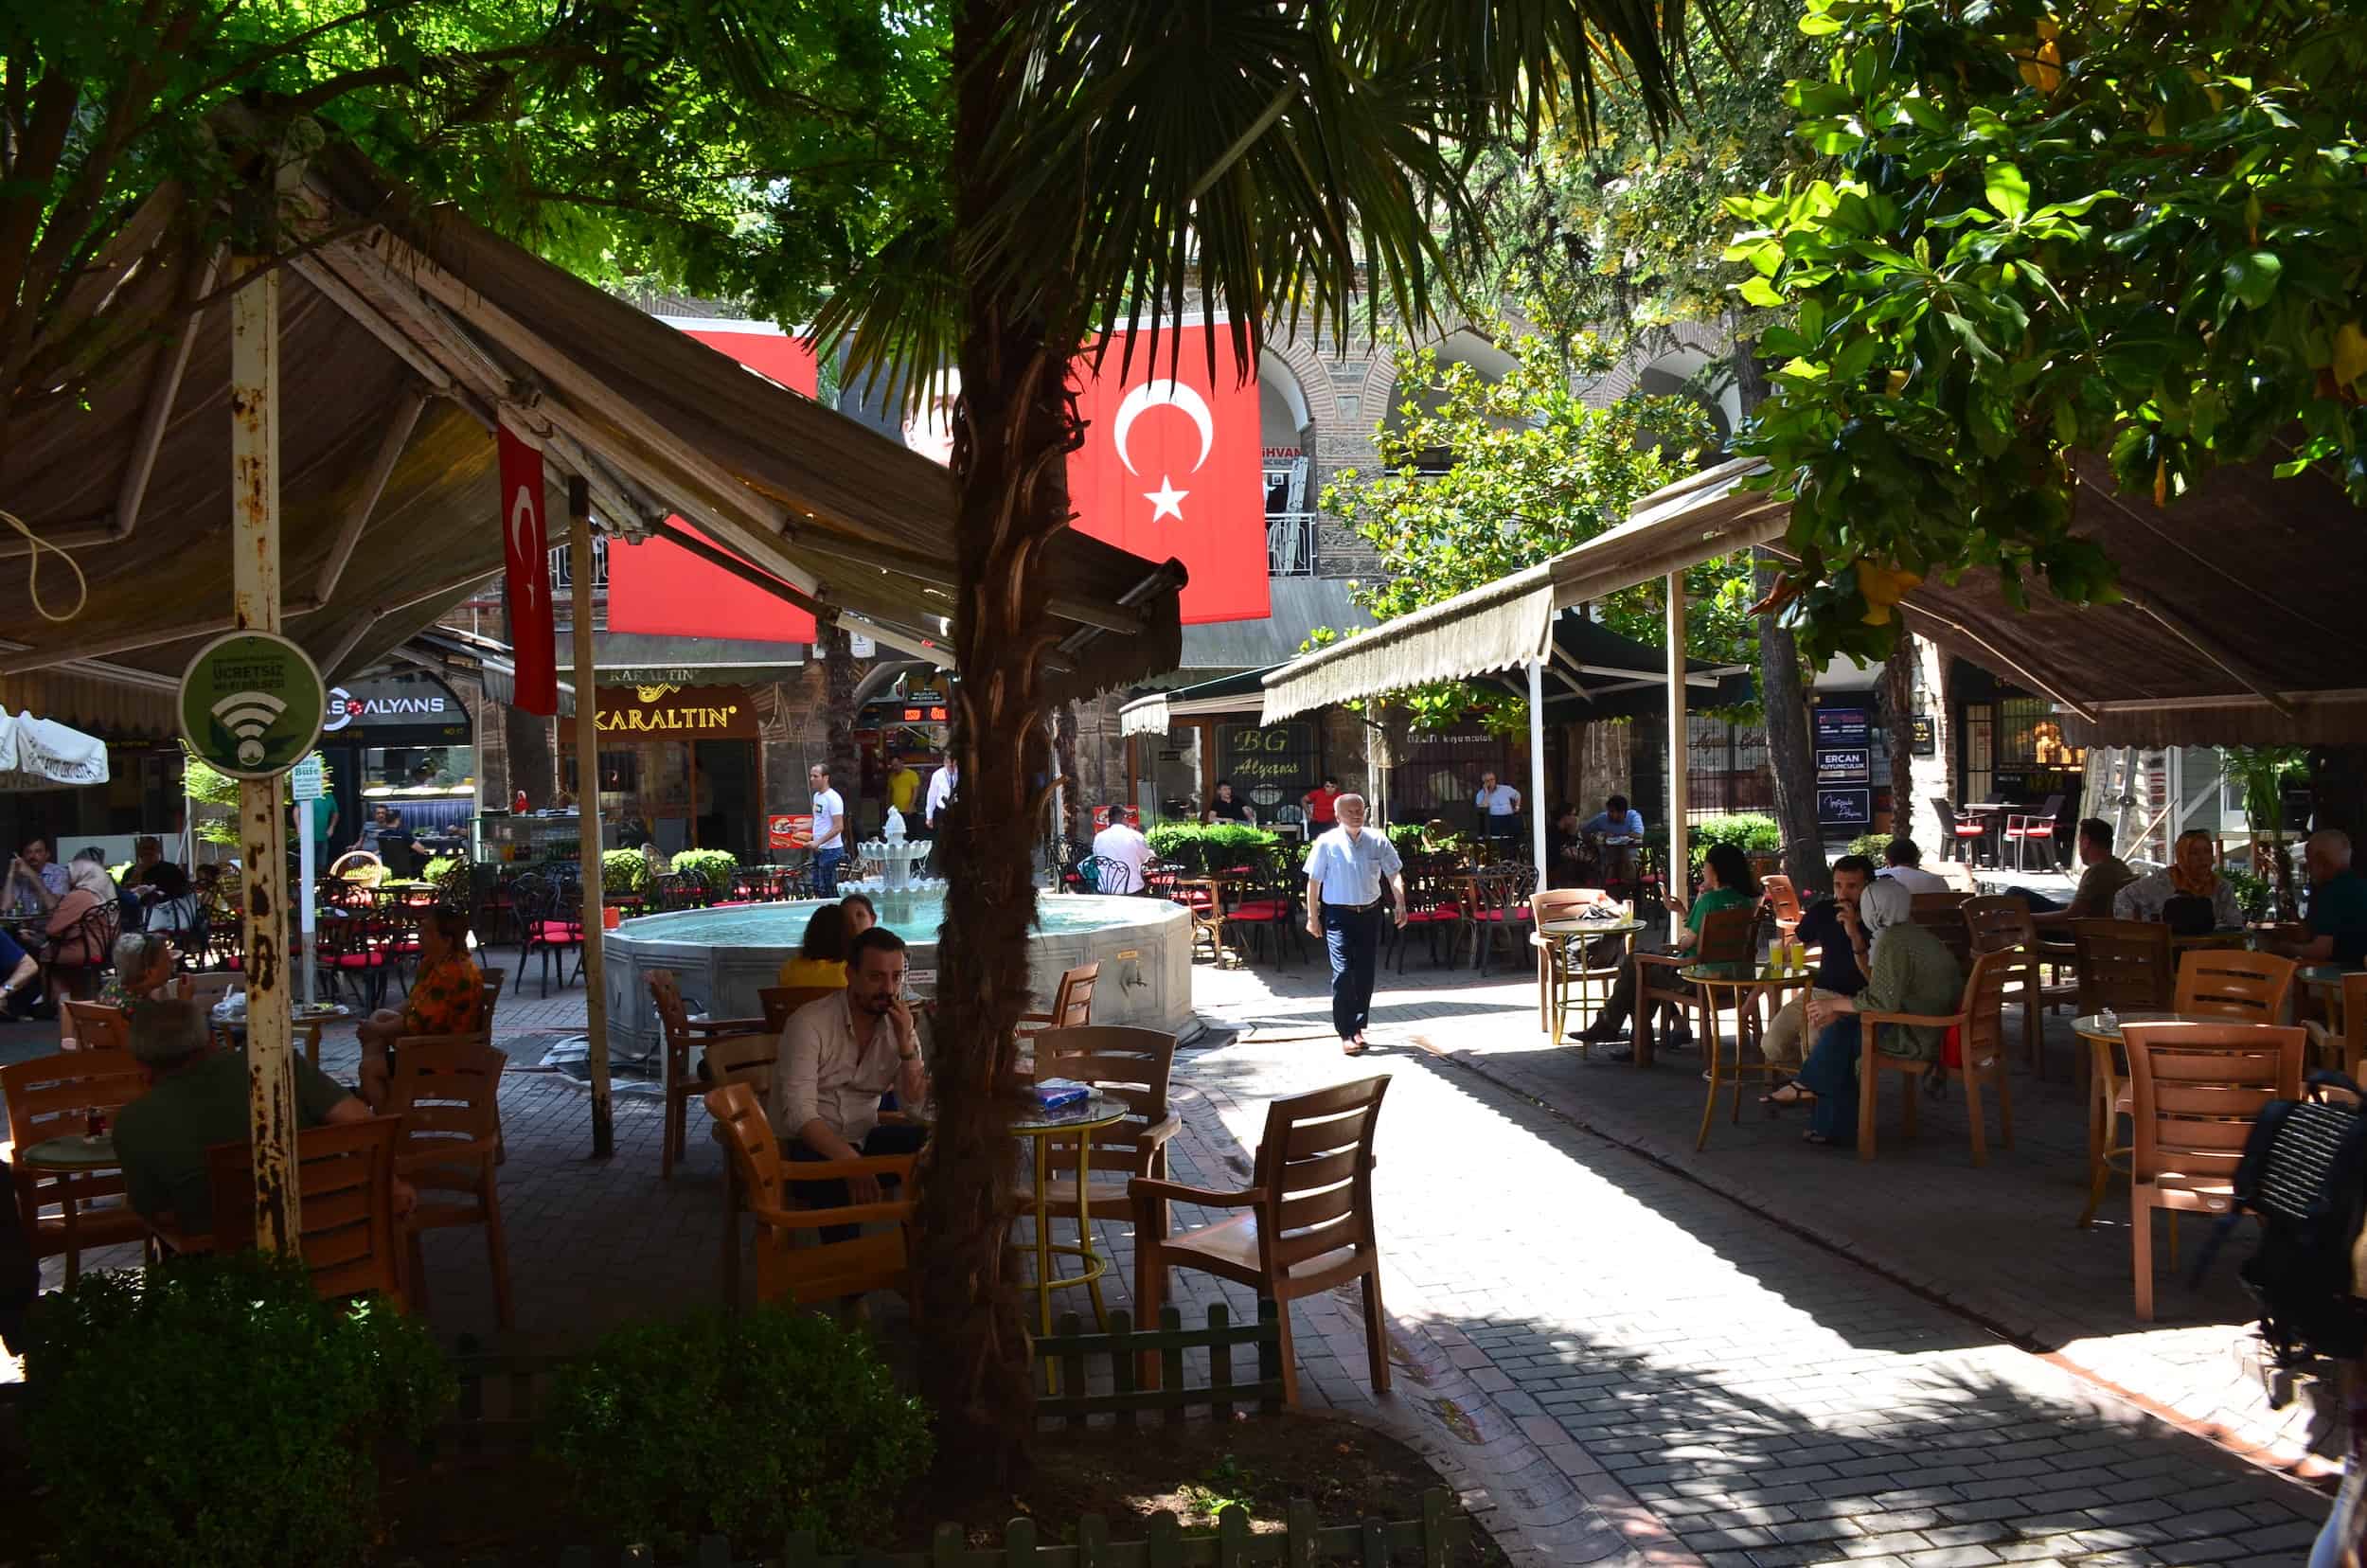 Courtyard of Emir Han in Bursa, Turkey